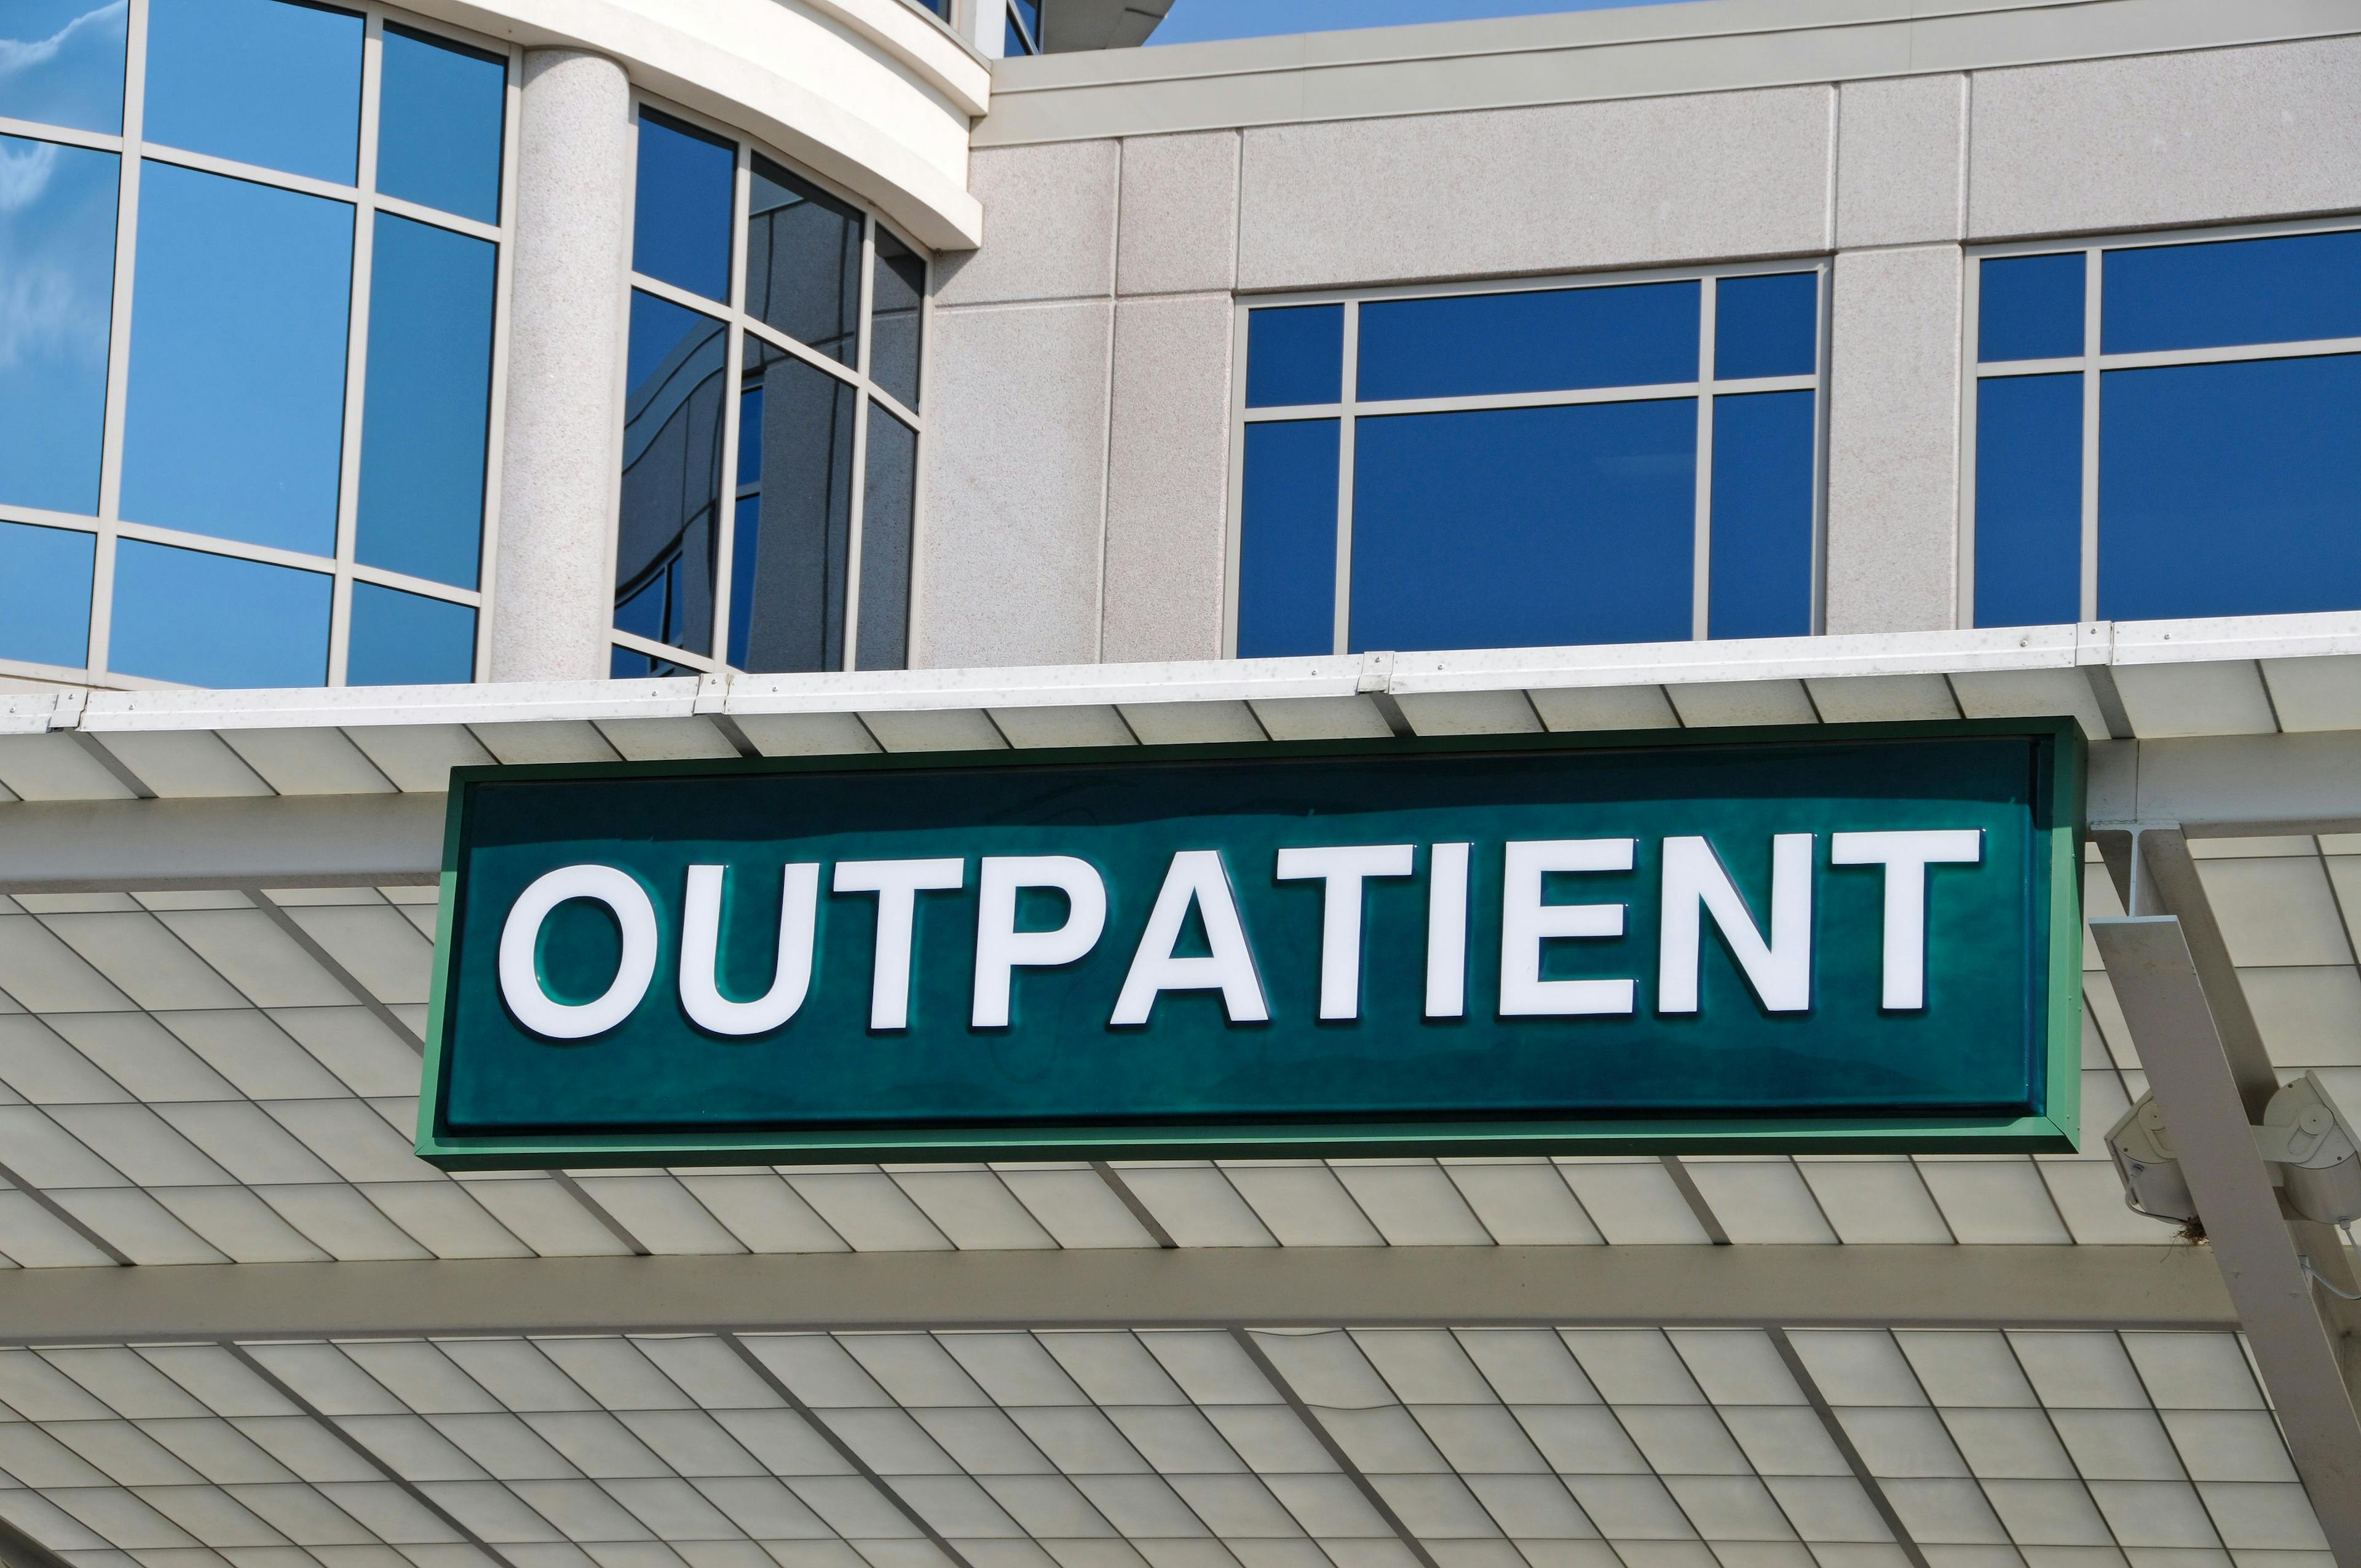 Outpatient sign at hospital ©EyeMark-stock.adobe.com